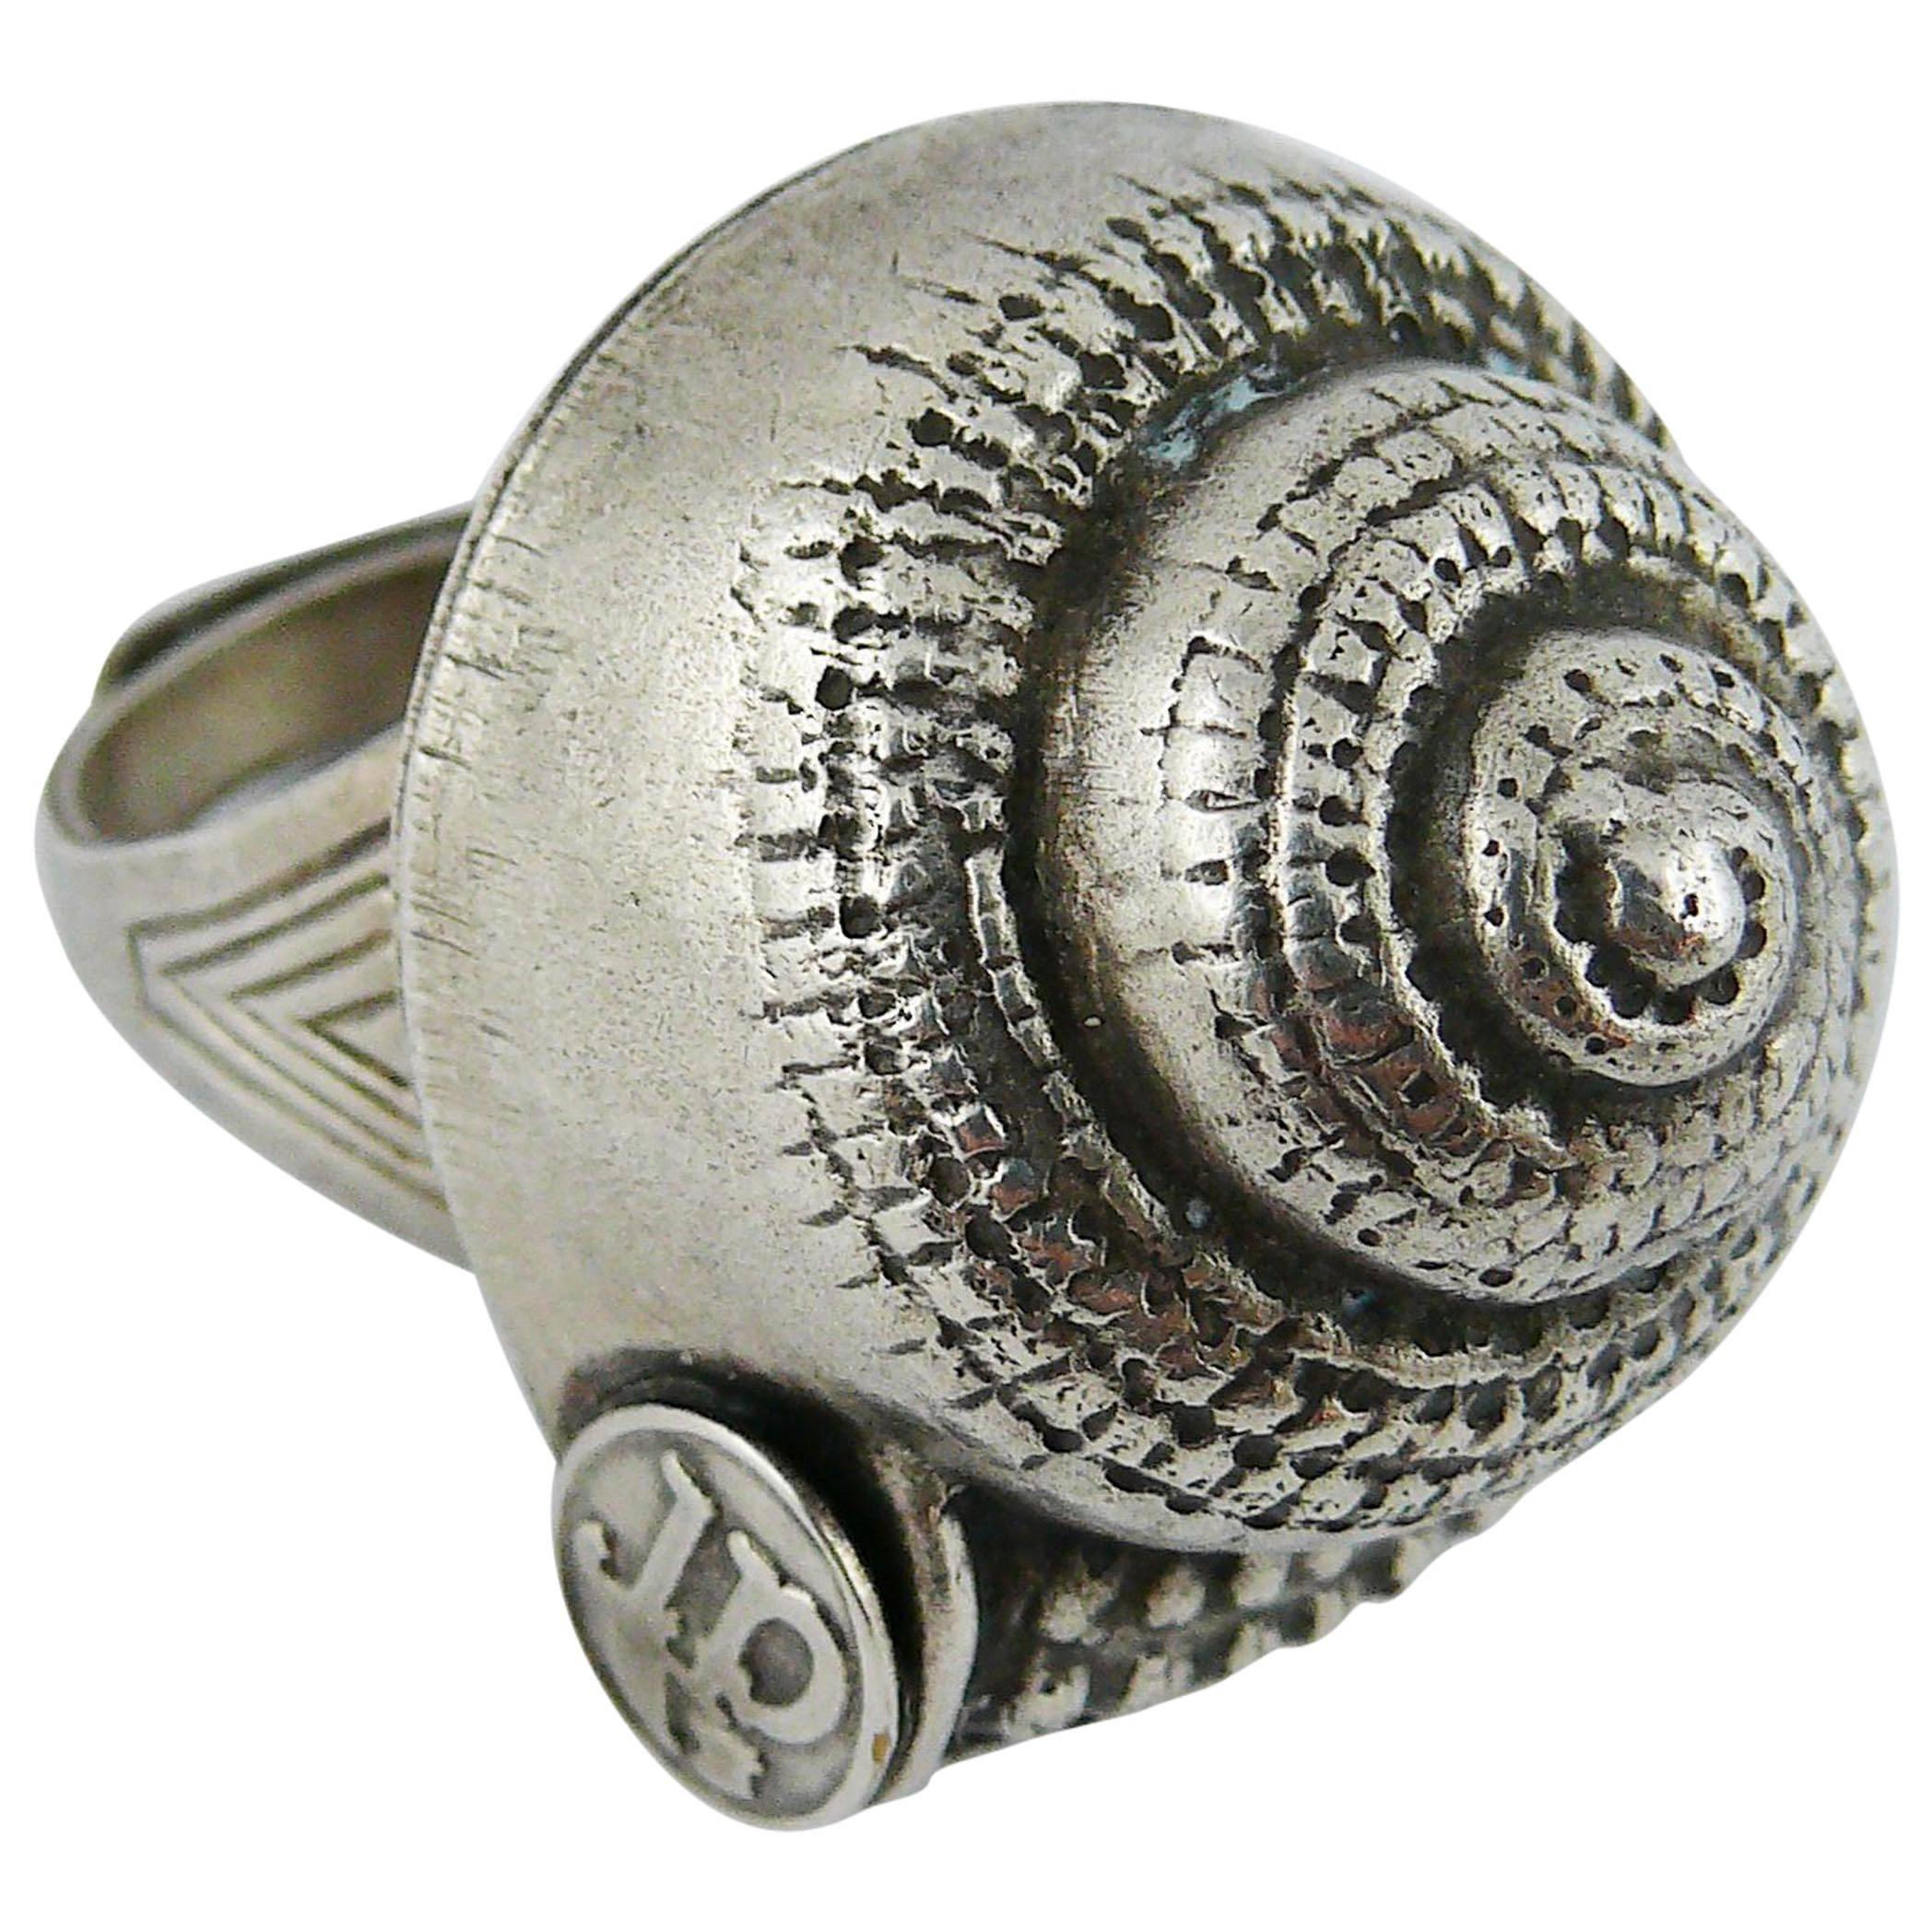 Jean Paul Gaultier Vintage Shell Ring